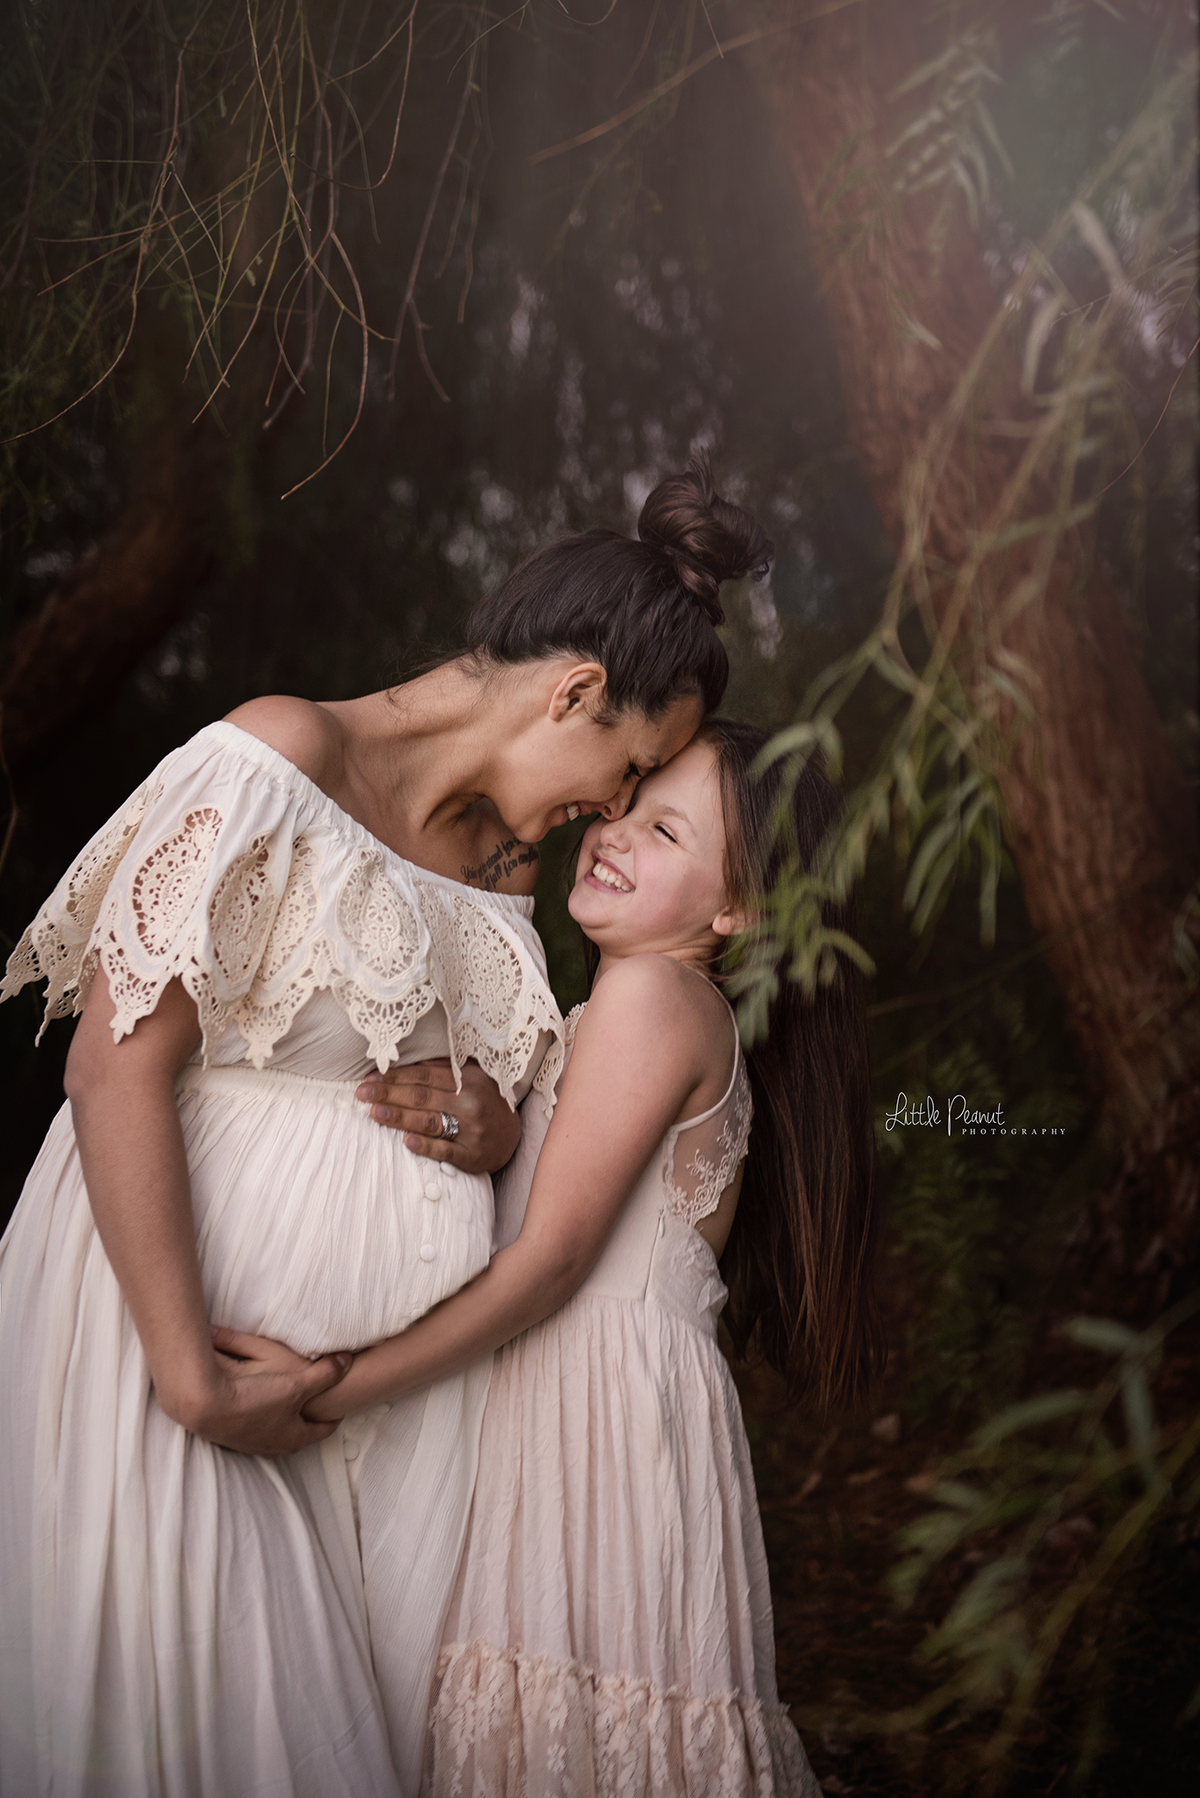 w2021-LittlePeanutPhotography-Maternity-1393